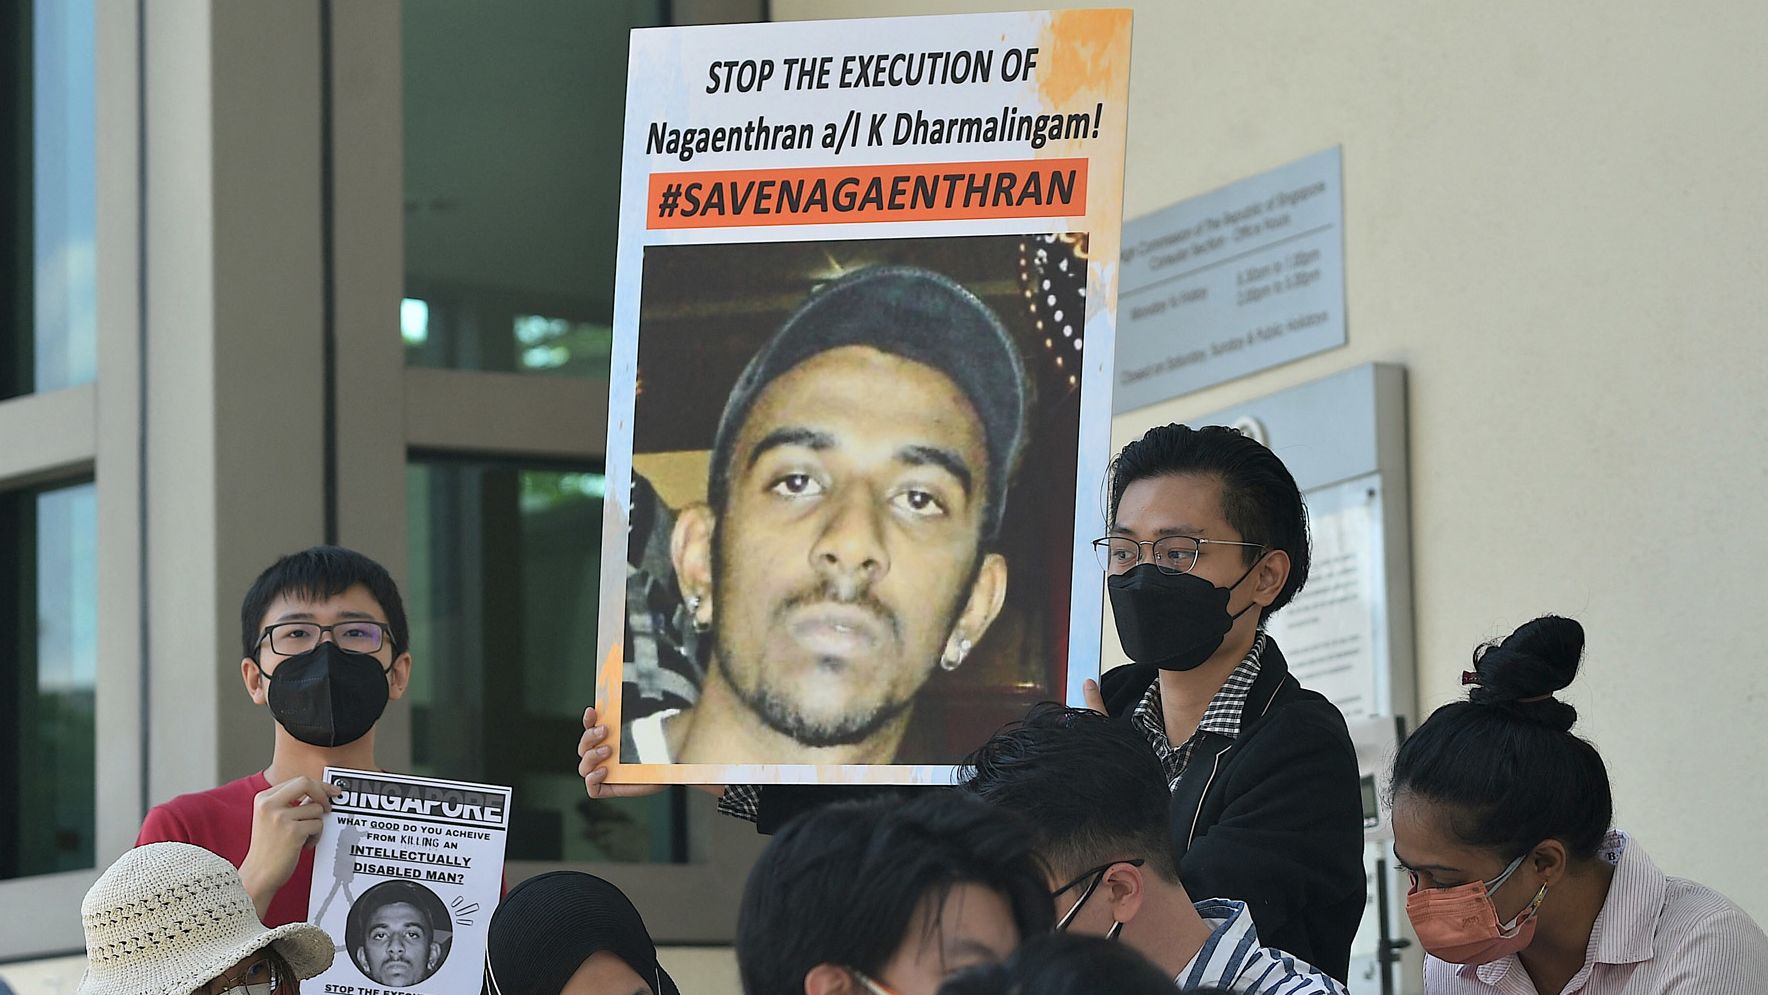 Nagaenthran Dharmalingam was executed in April for drug trafficking.